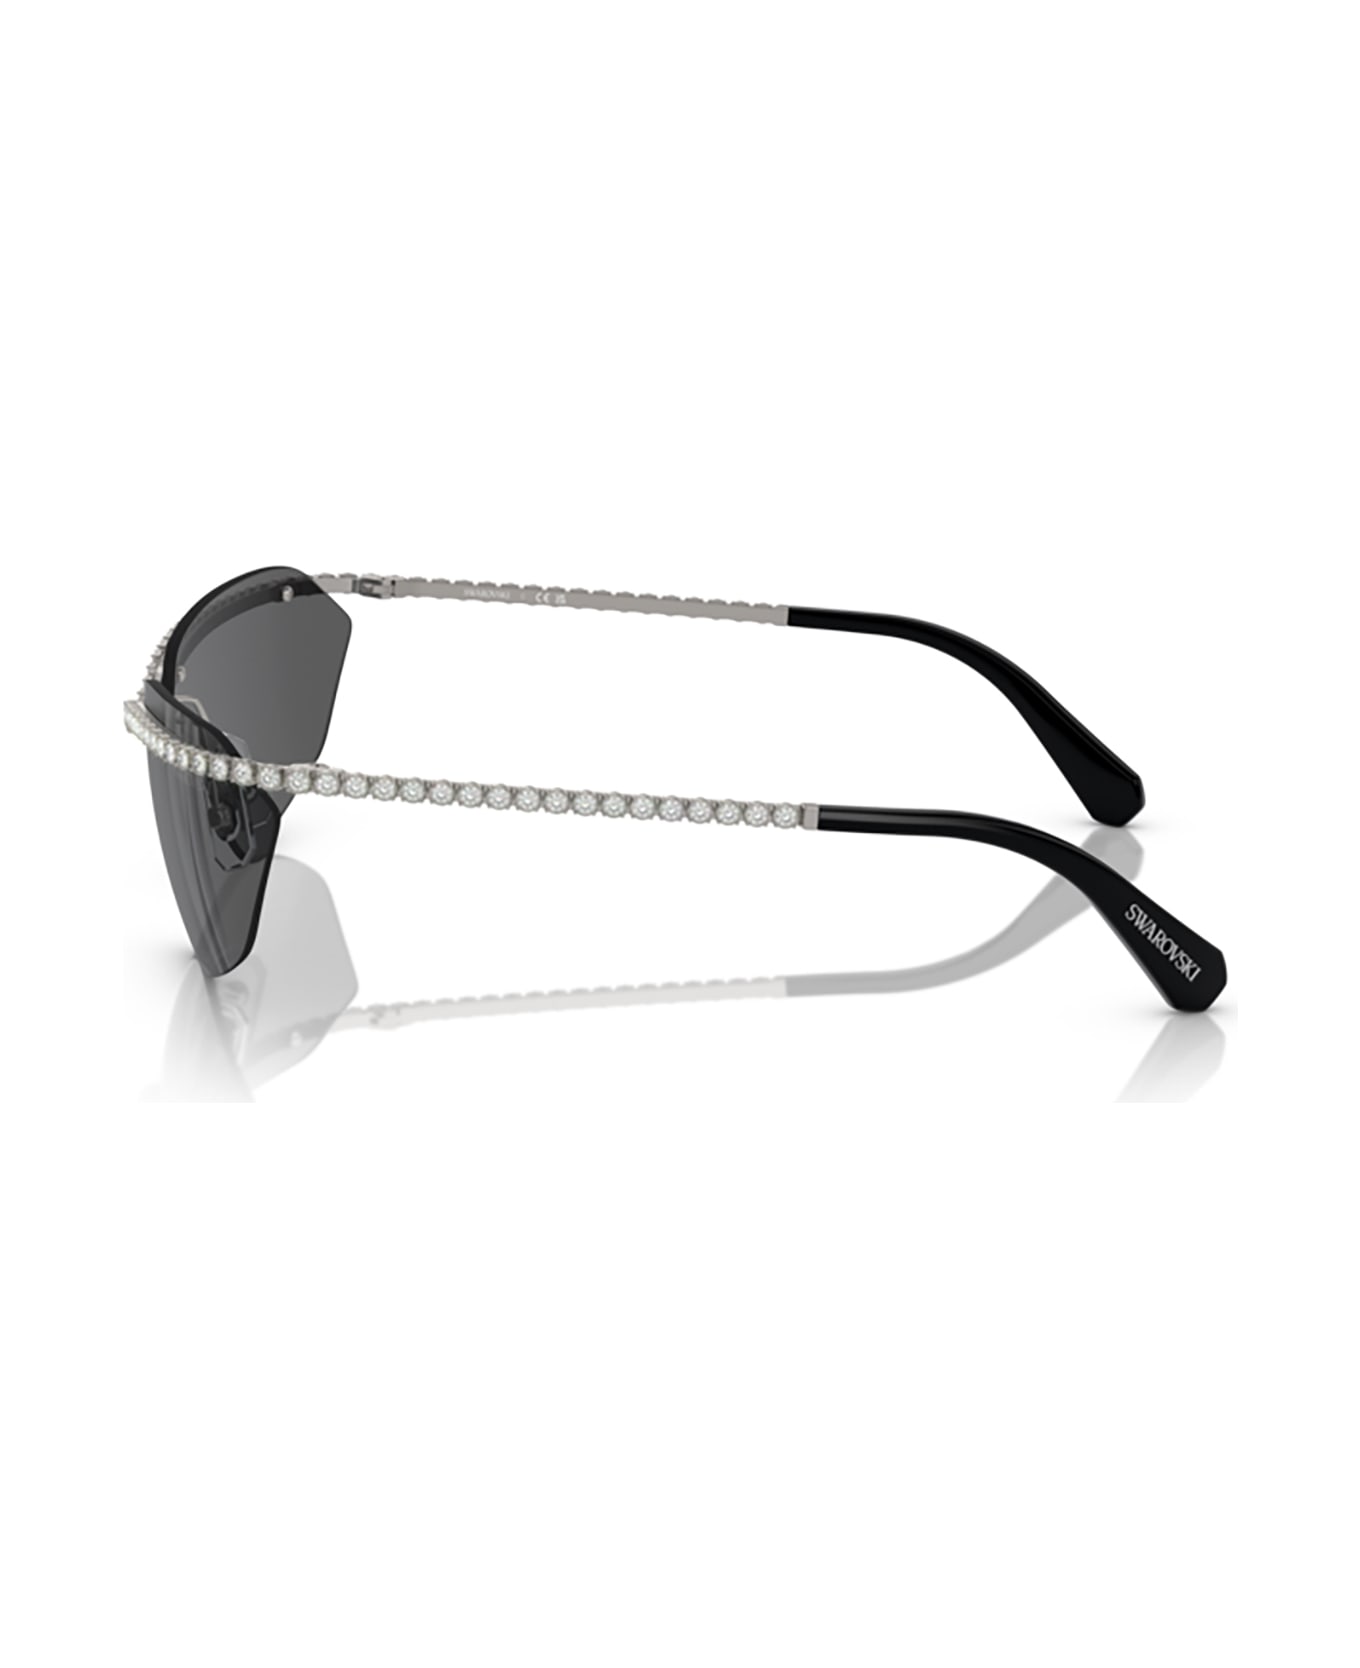 Swarovski Sk7001 Gunmetal Sunglasses - Gunmetal